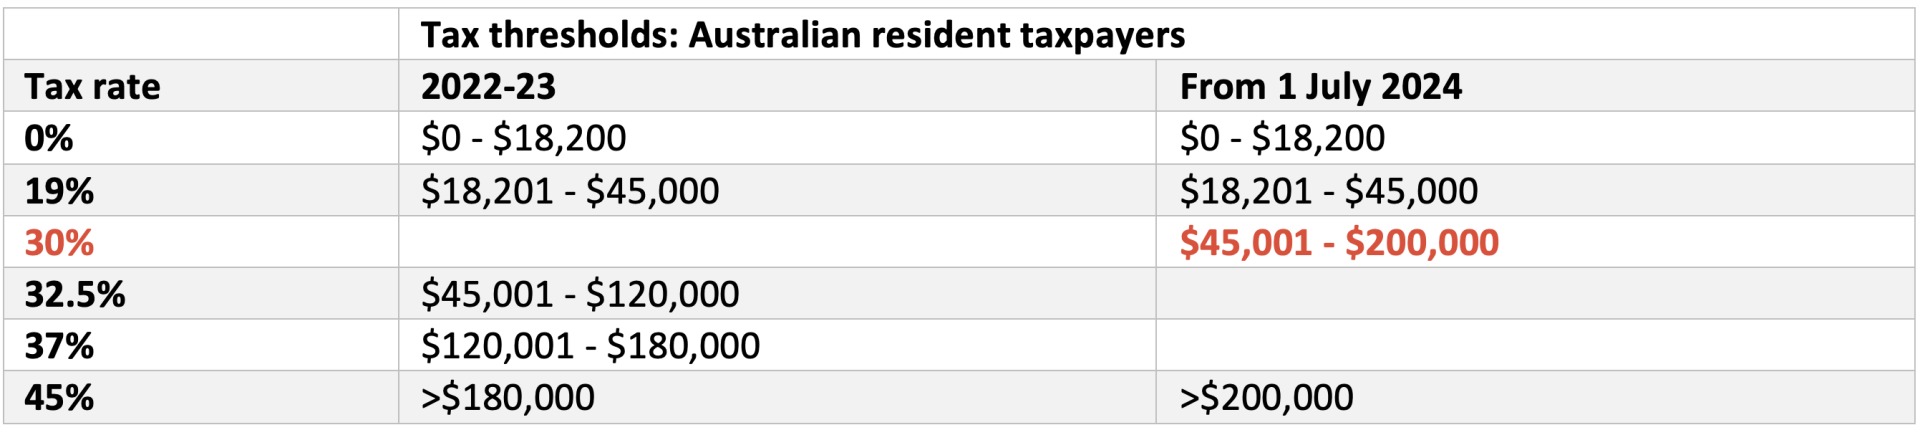 Tax thresholds: Australian resident taxpayers